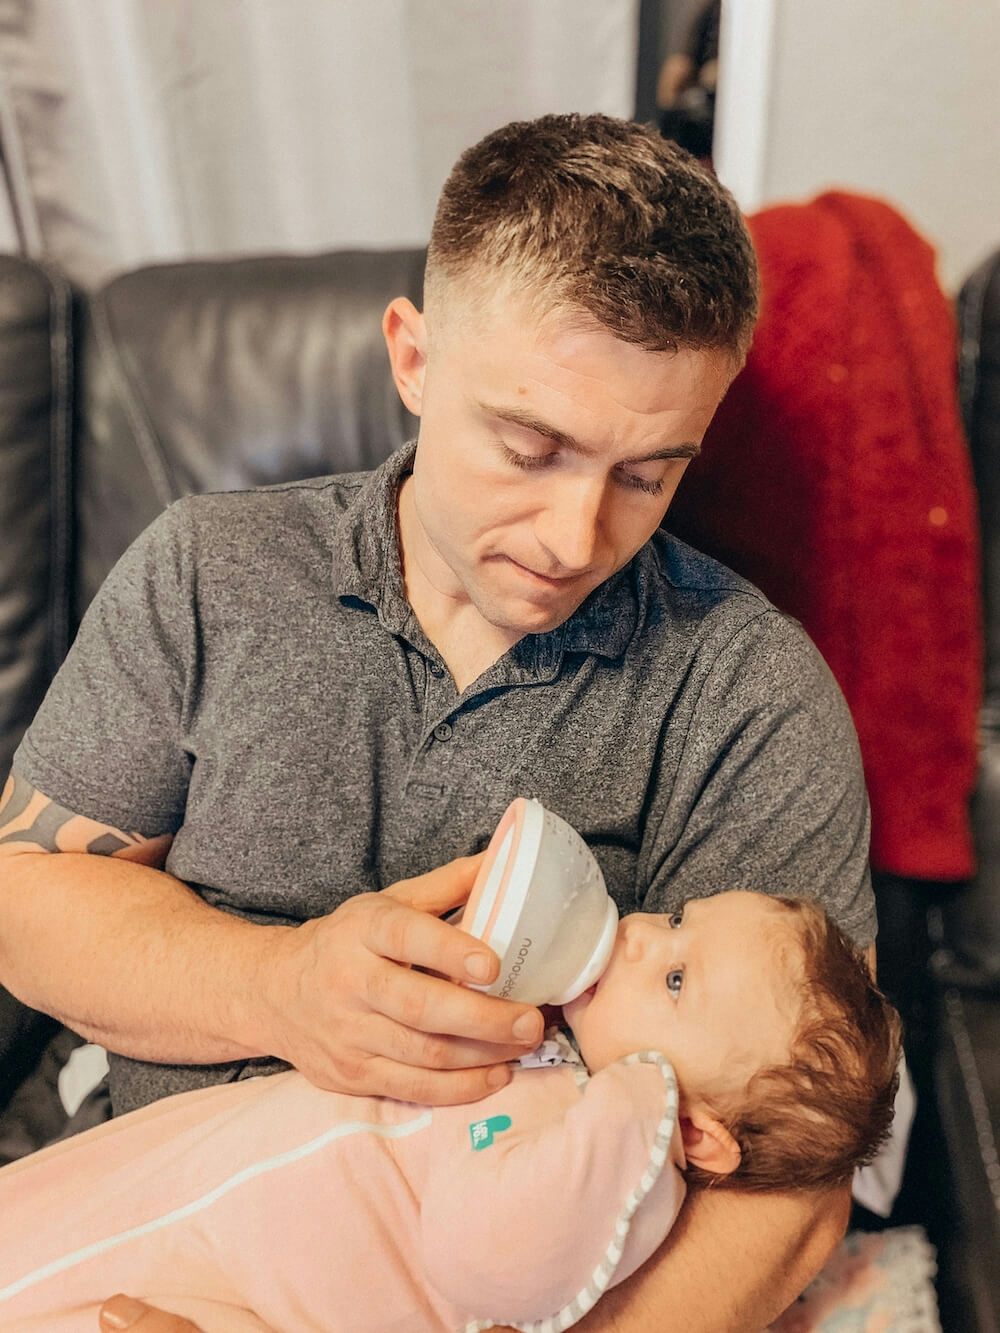 Dad feeding baby with breastmilk bottle